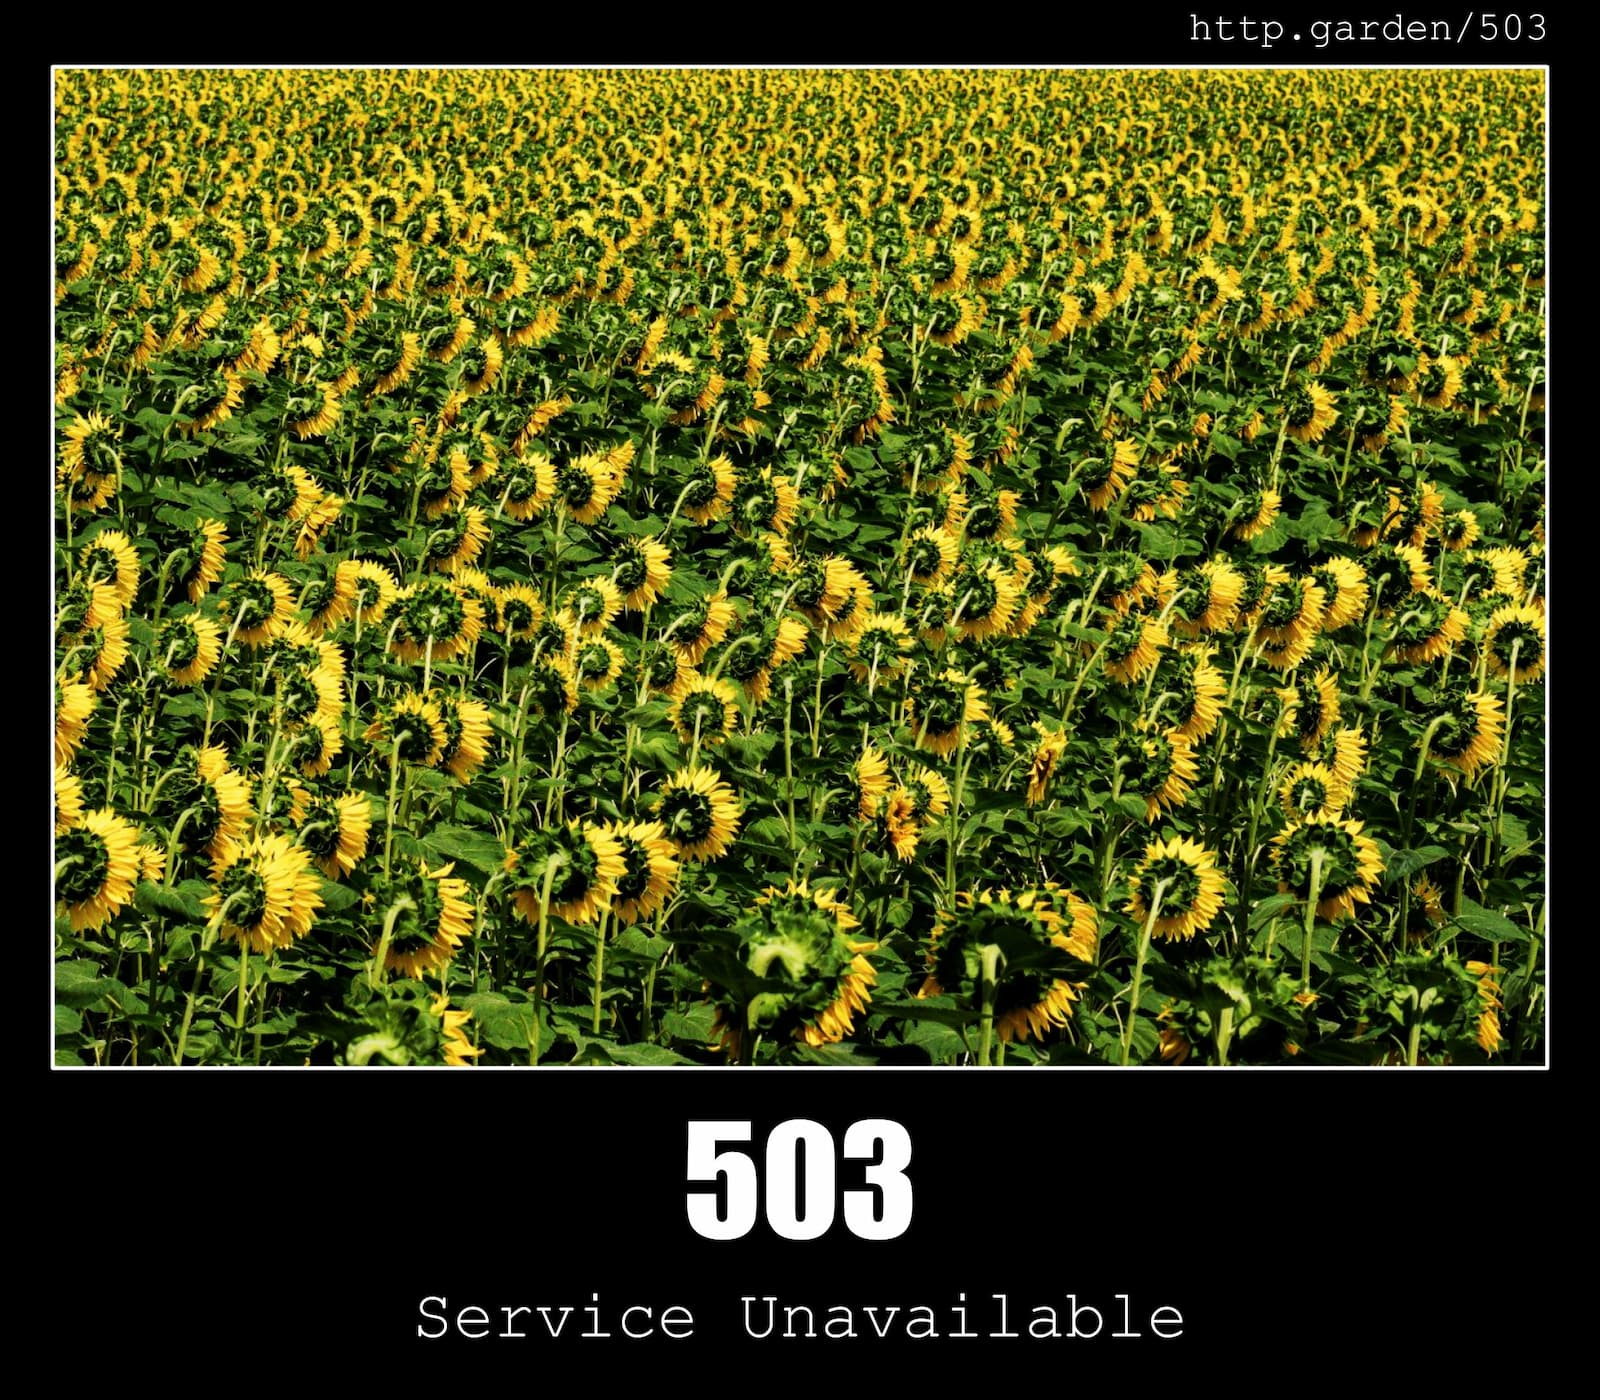 HTTP Status Code 503 Service Unavailable